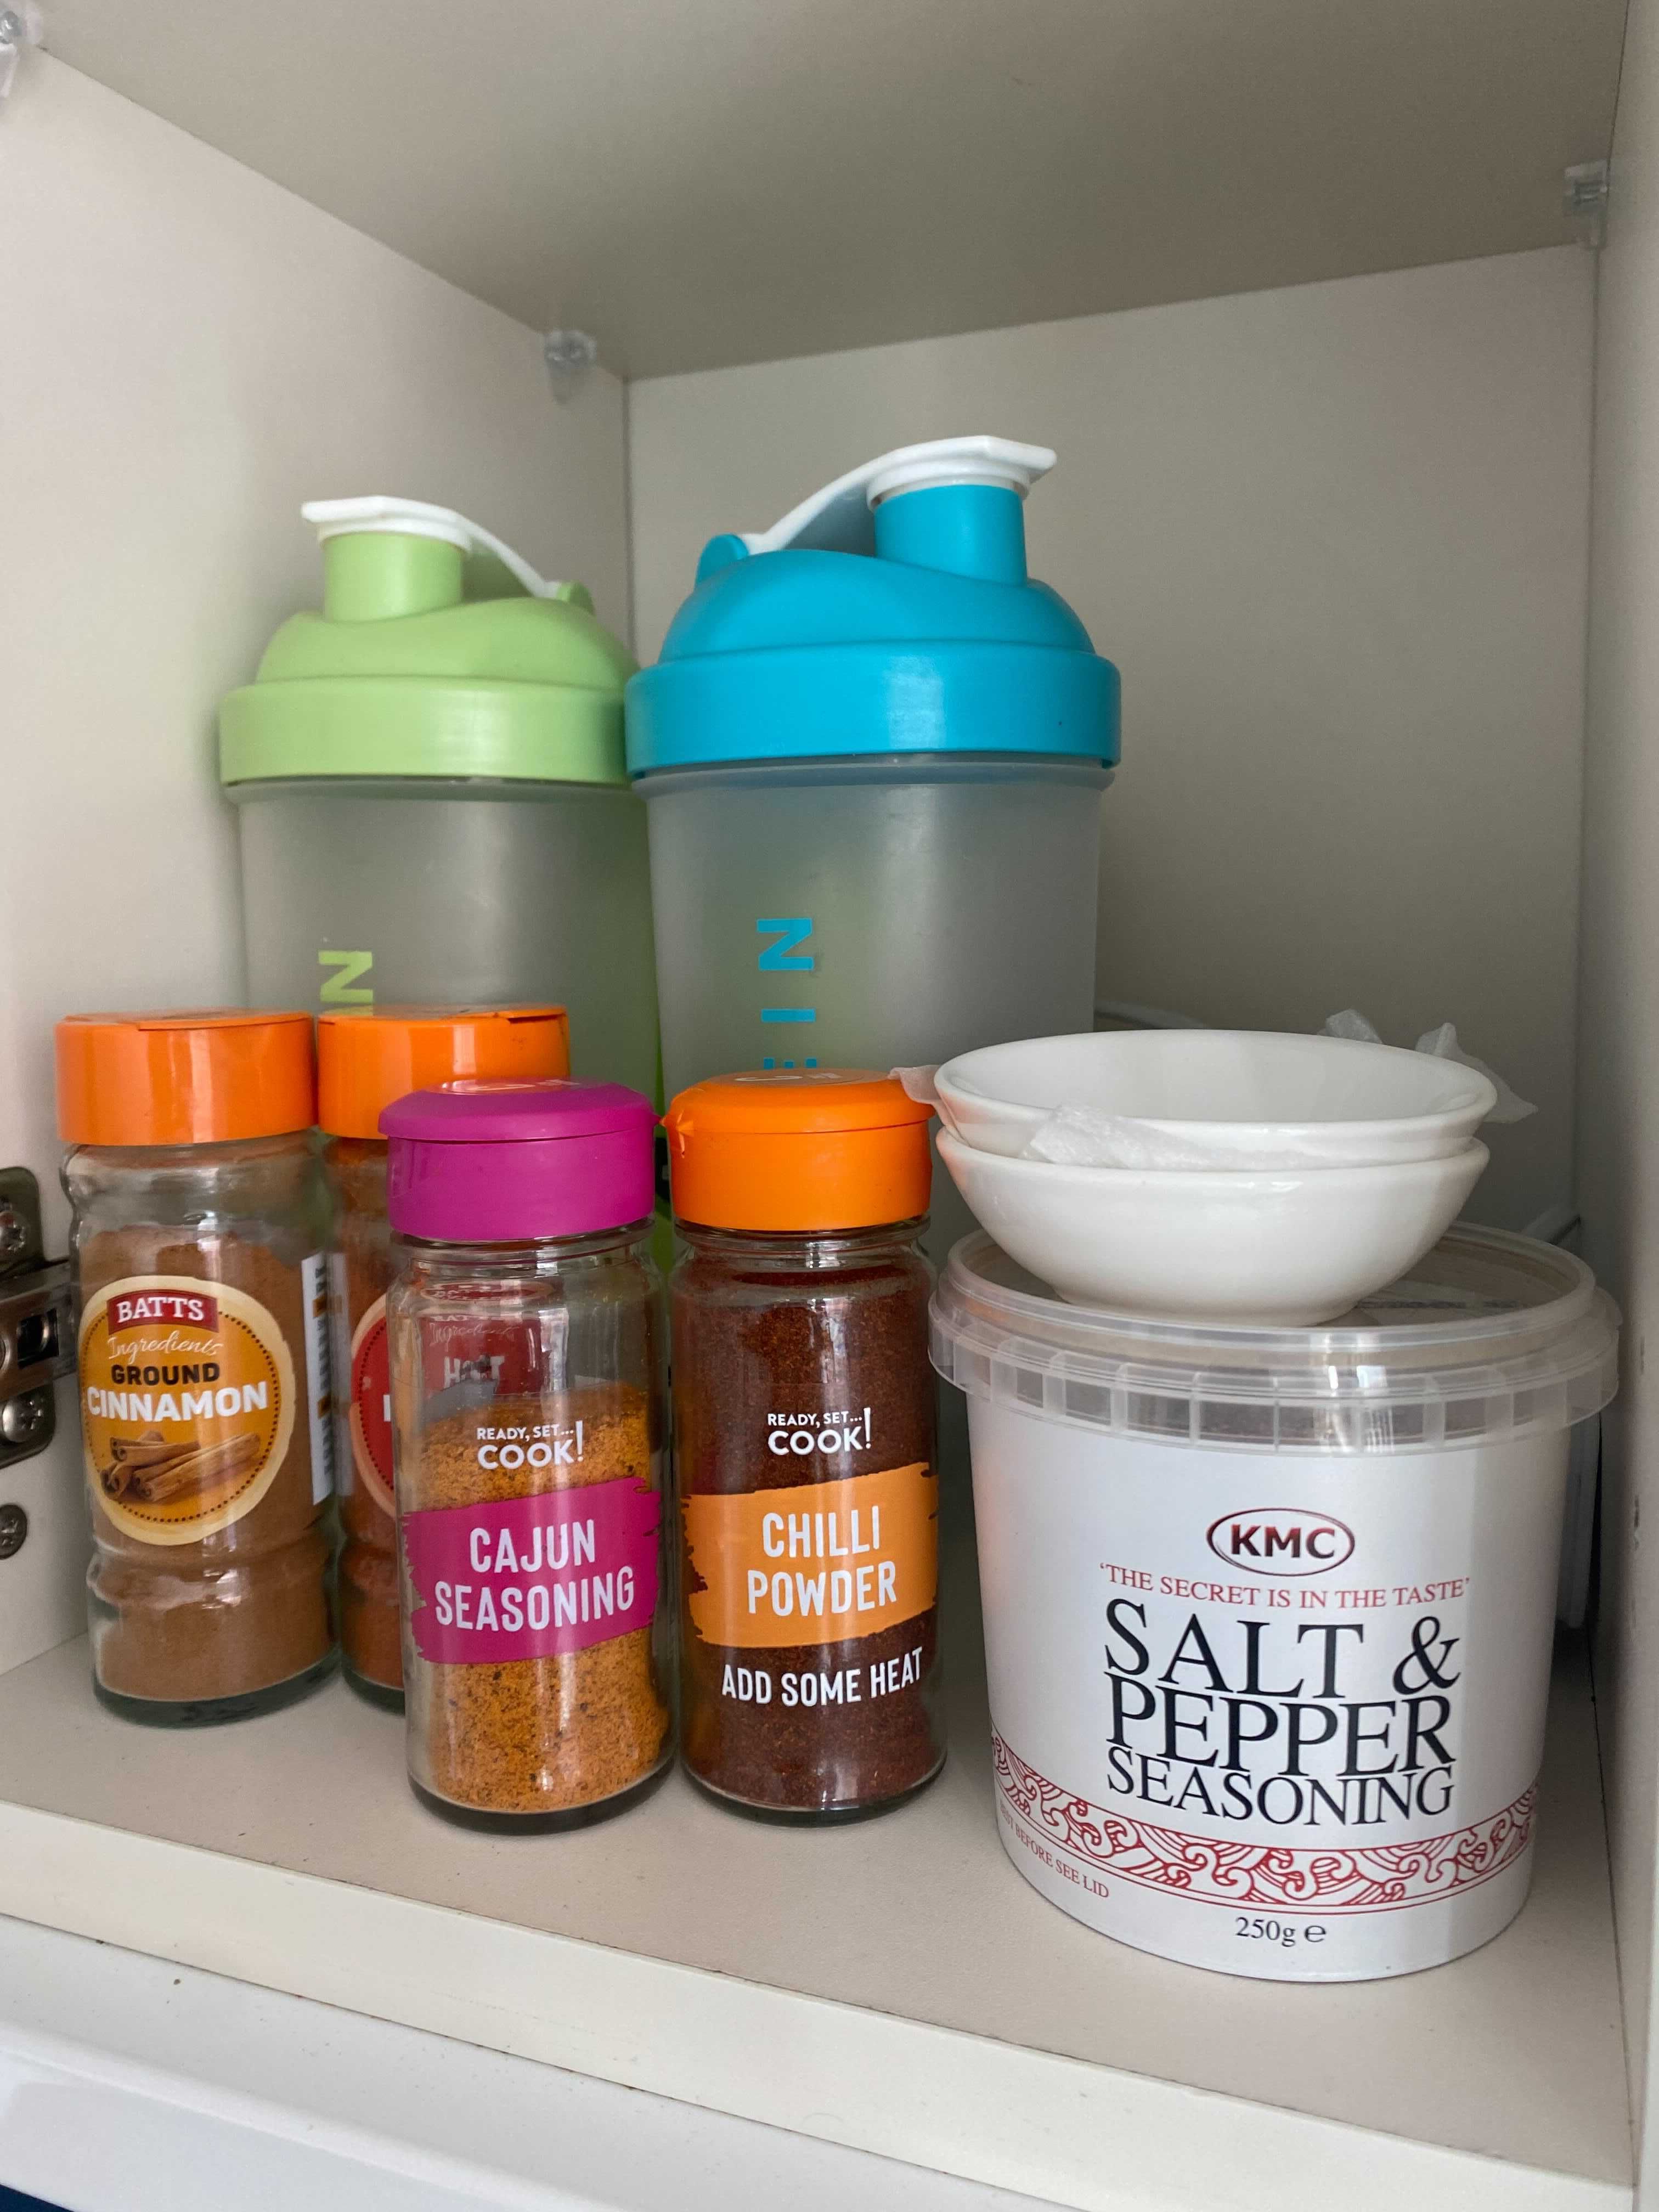 KMC Salt and Pepper Seasoning Review